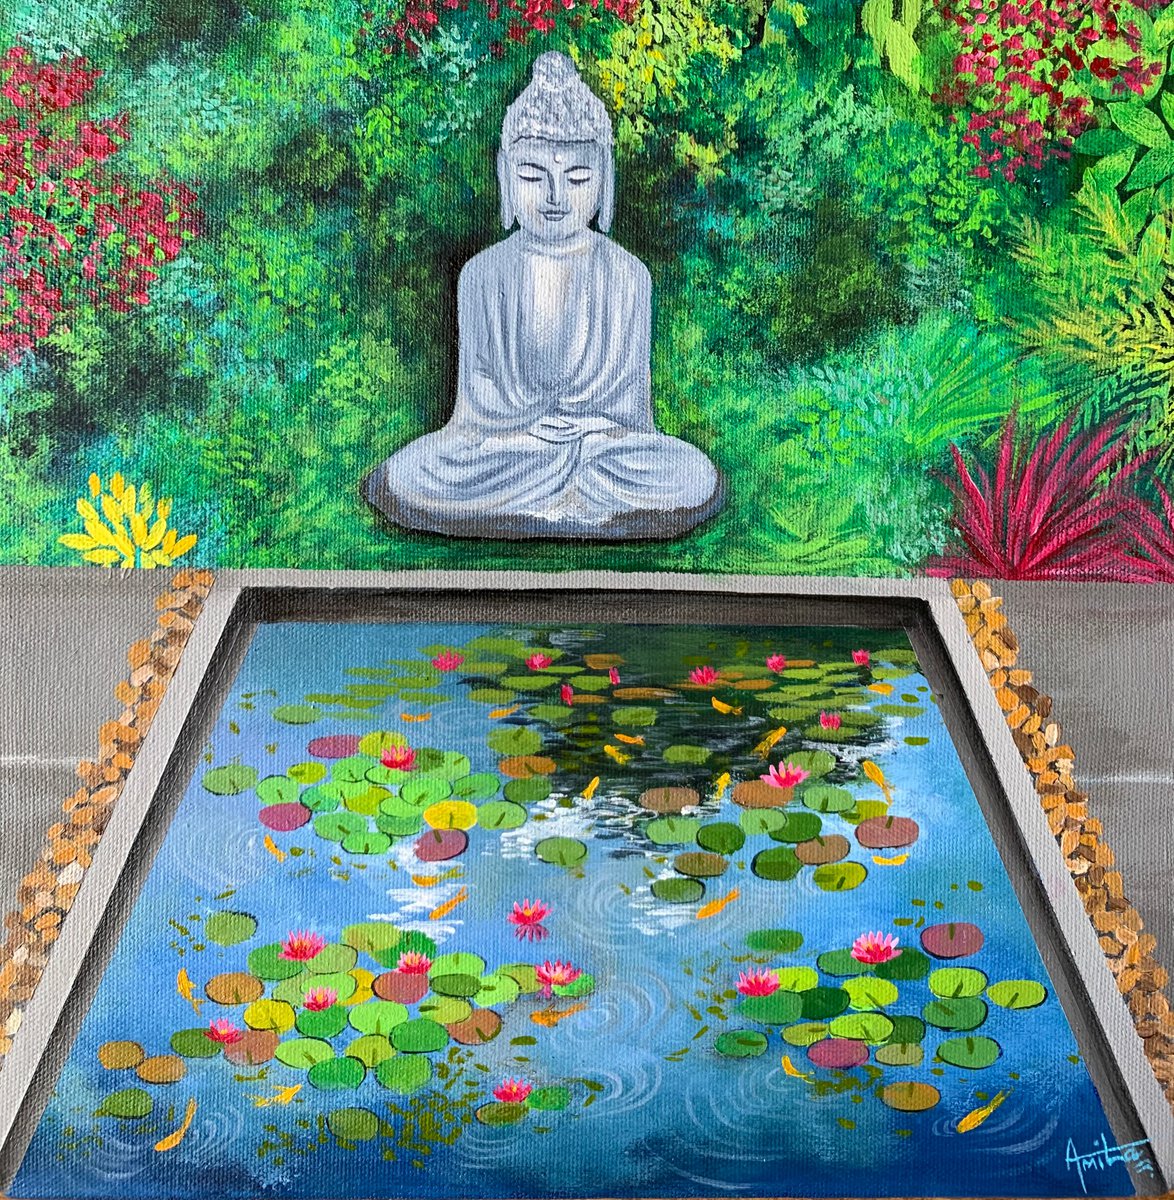 Backyard Pond! Buddha with water lilies pond by Amita Dand